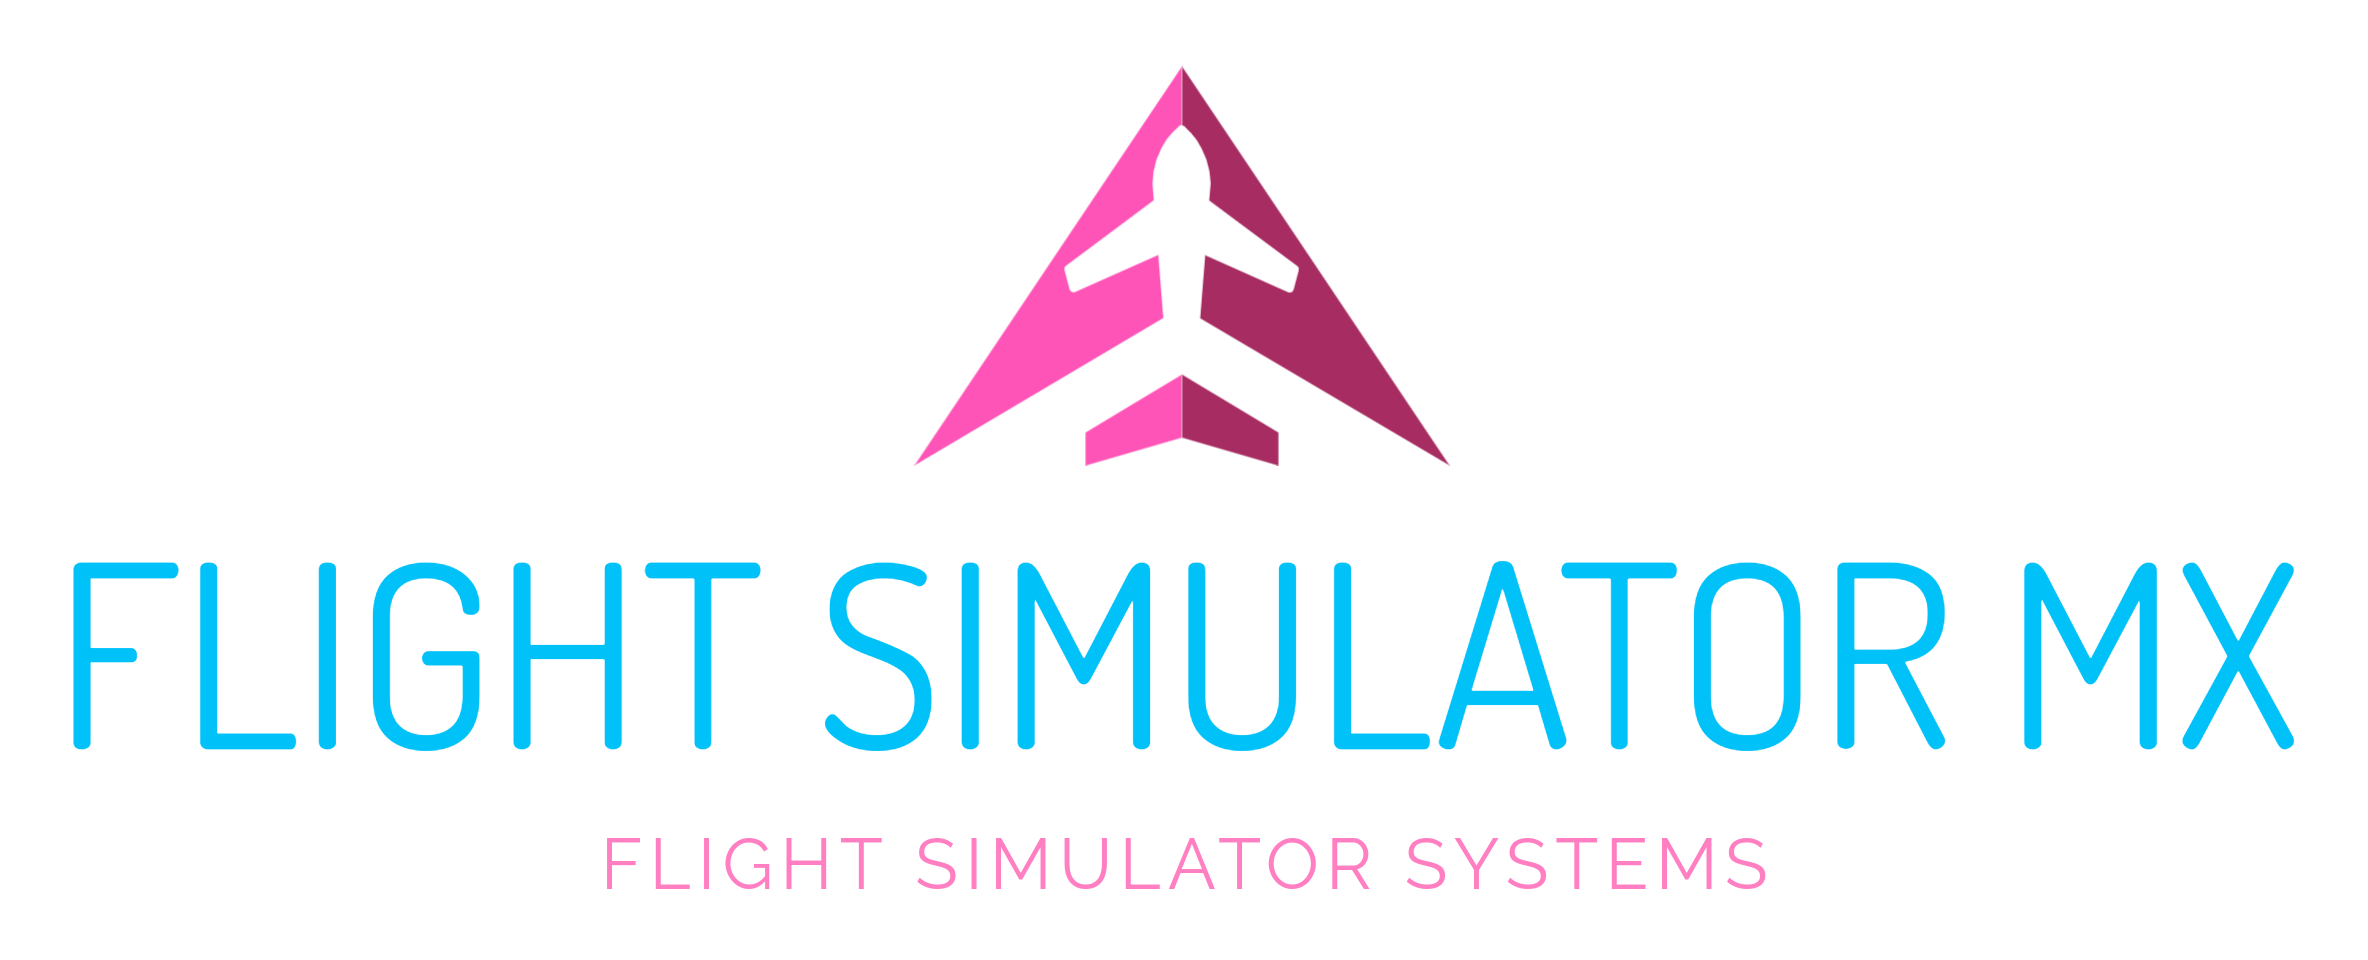 Flight Simulator MX